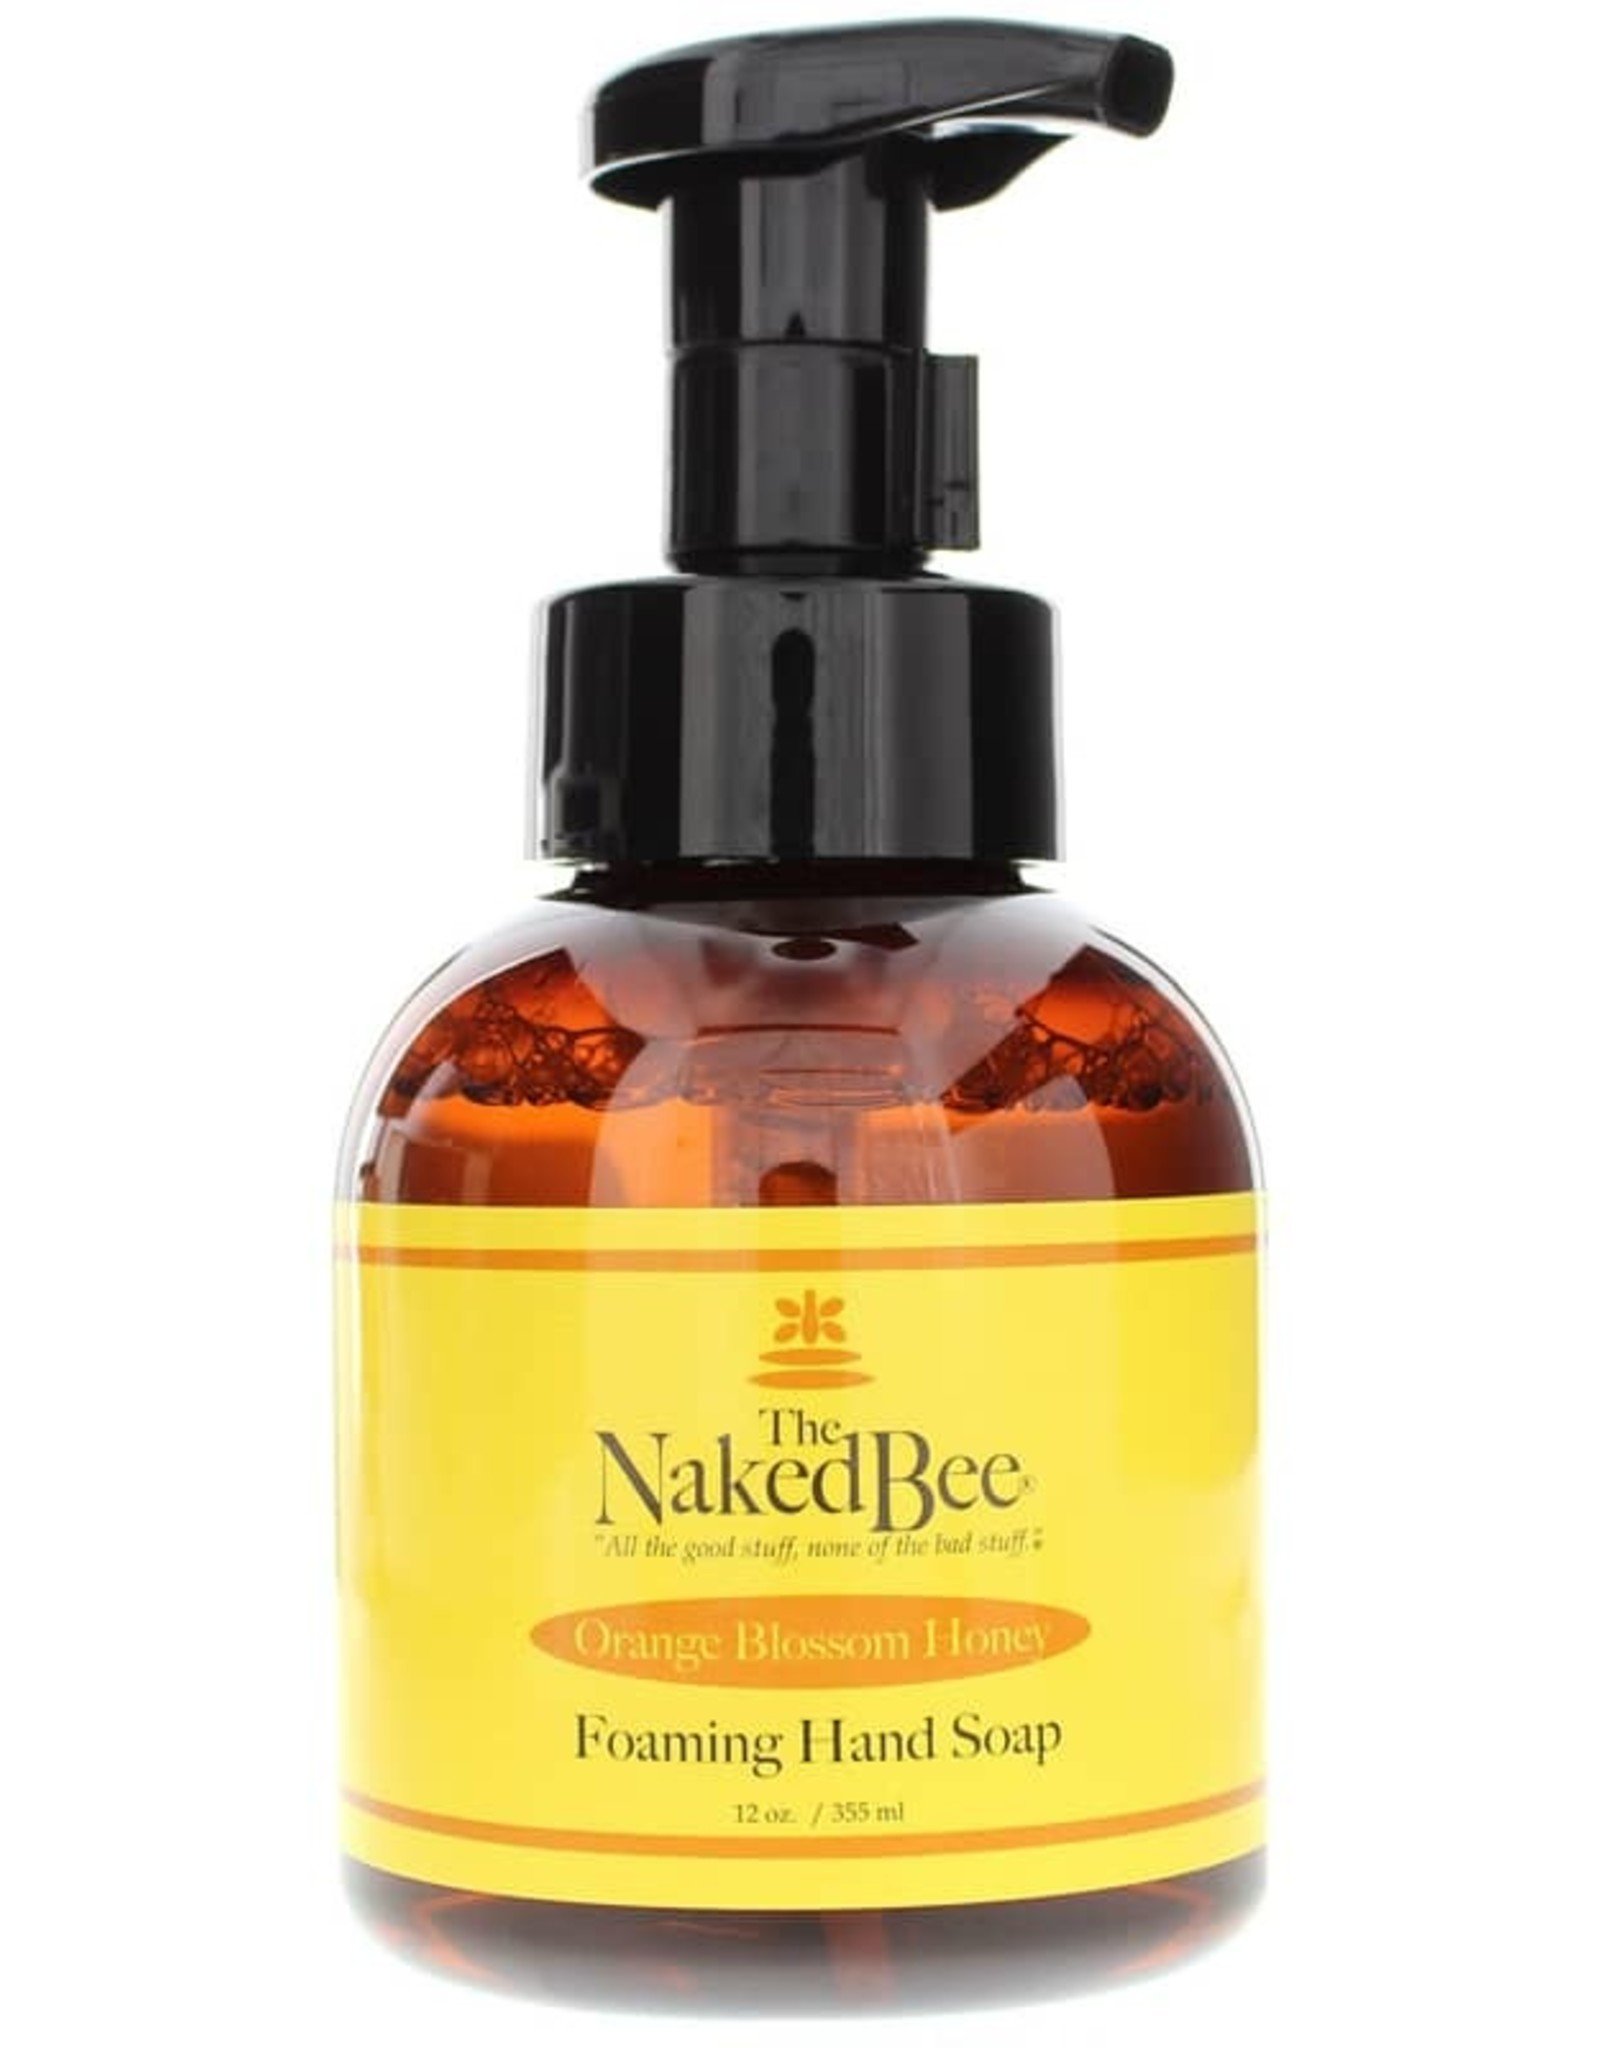 Naked Bee Orange Blossom Honey Foaming Hand Soap